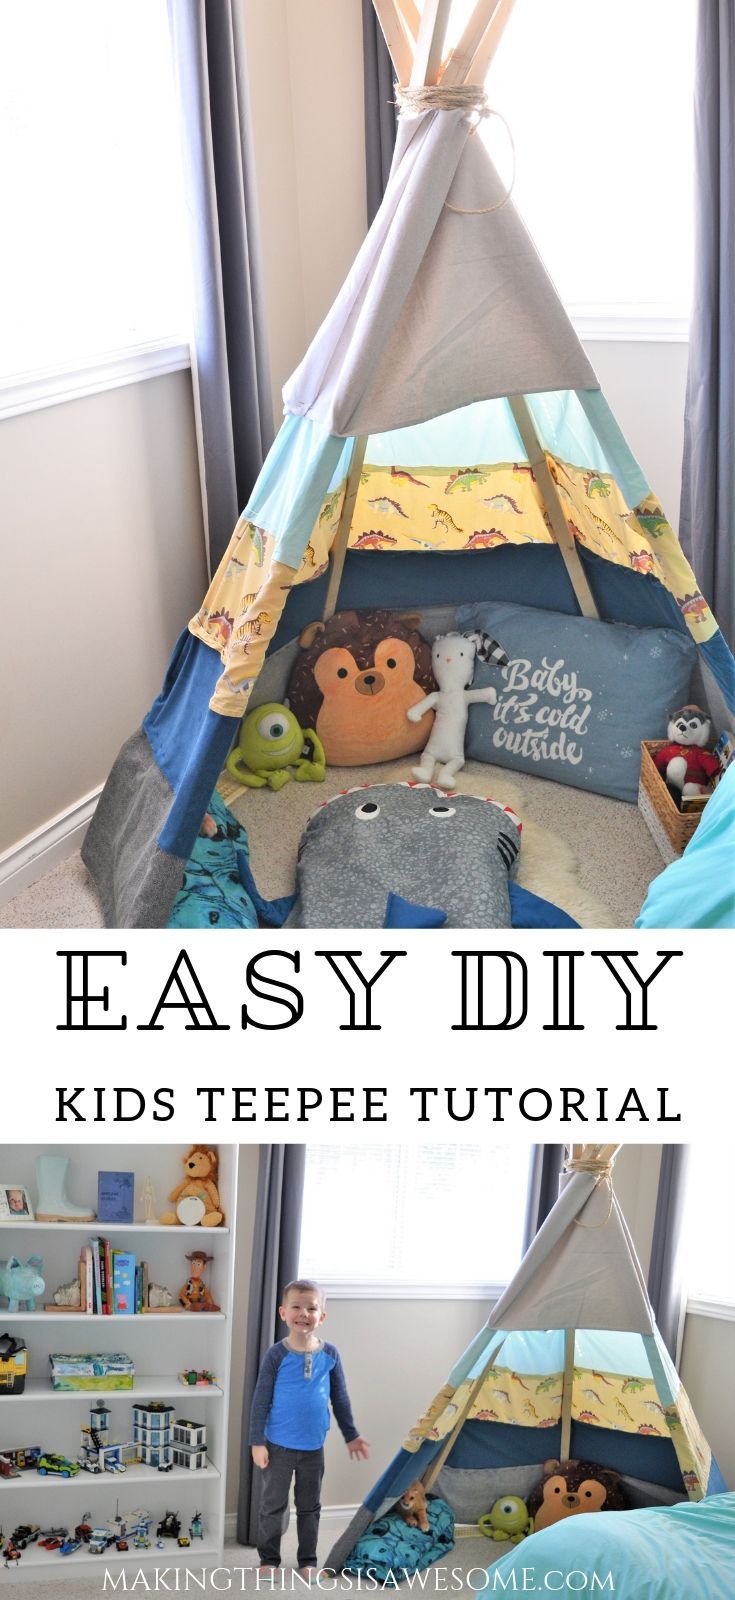 Easy DIY Kids Teepee Tutorial! - Big Enough for Adults Too! - Making Things is Awesome - Easy DIY Kids Teepee Tutorial! - Big Enough for Adults Too! - Making Things is Awesome -   24 diy Kids teepee ideas